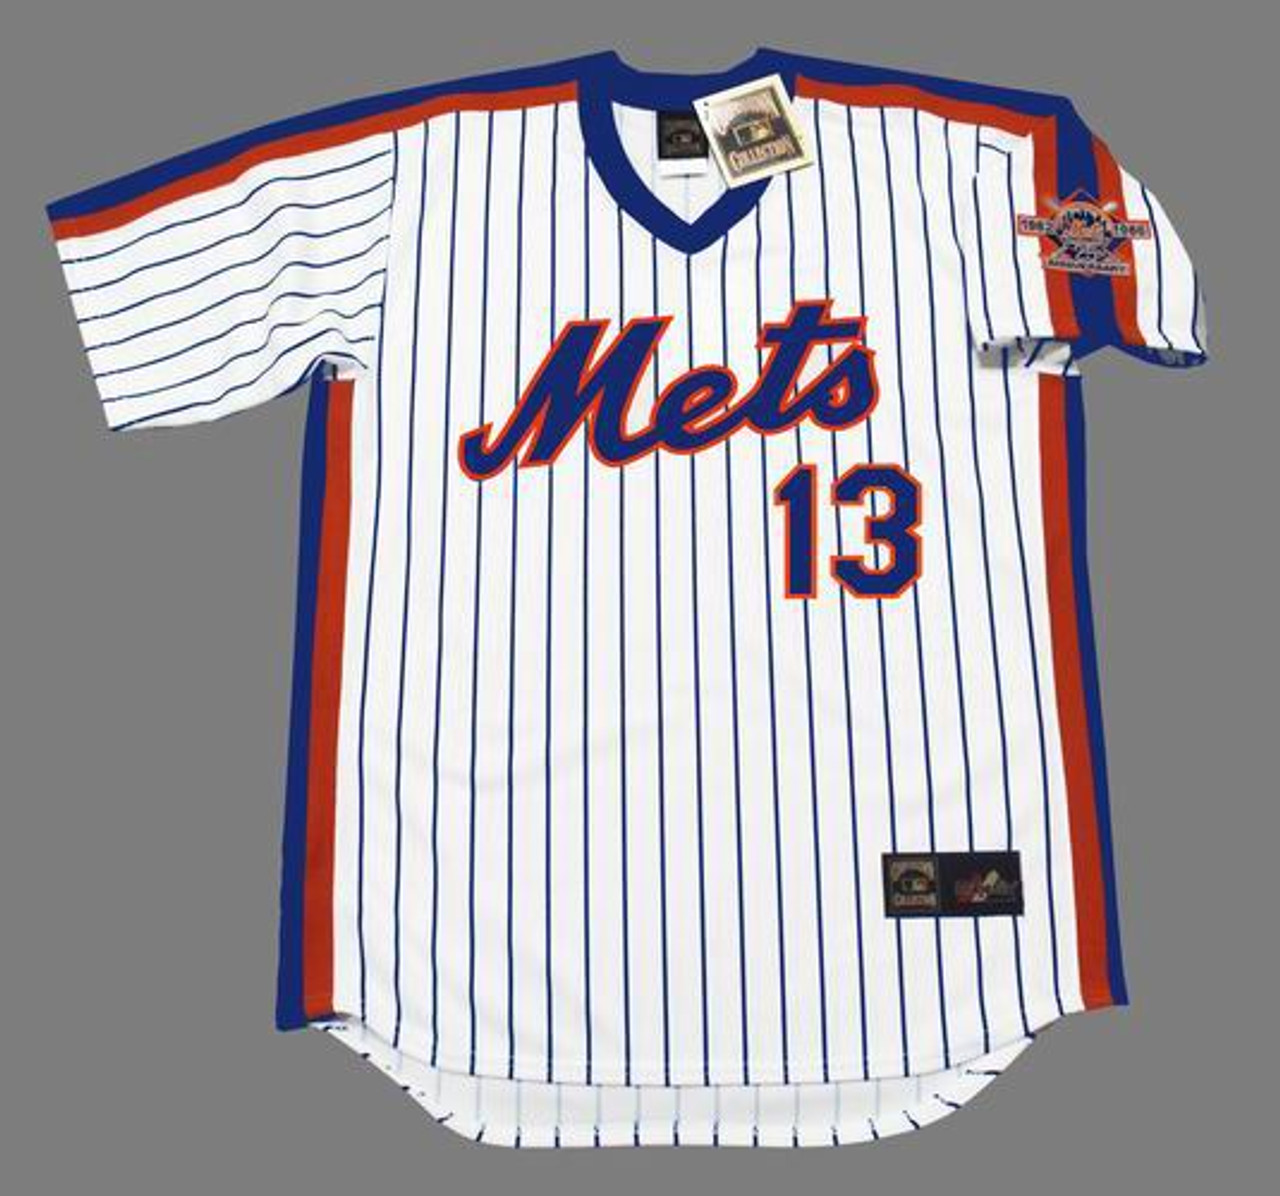 MAJESTIC  LEE MAZZILLI New York Mets 1986 Cooperstown Baseball Jersey